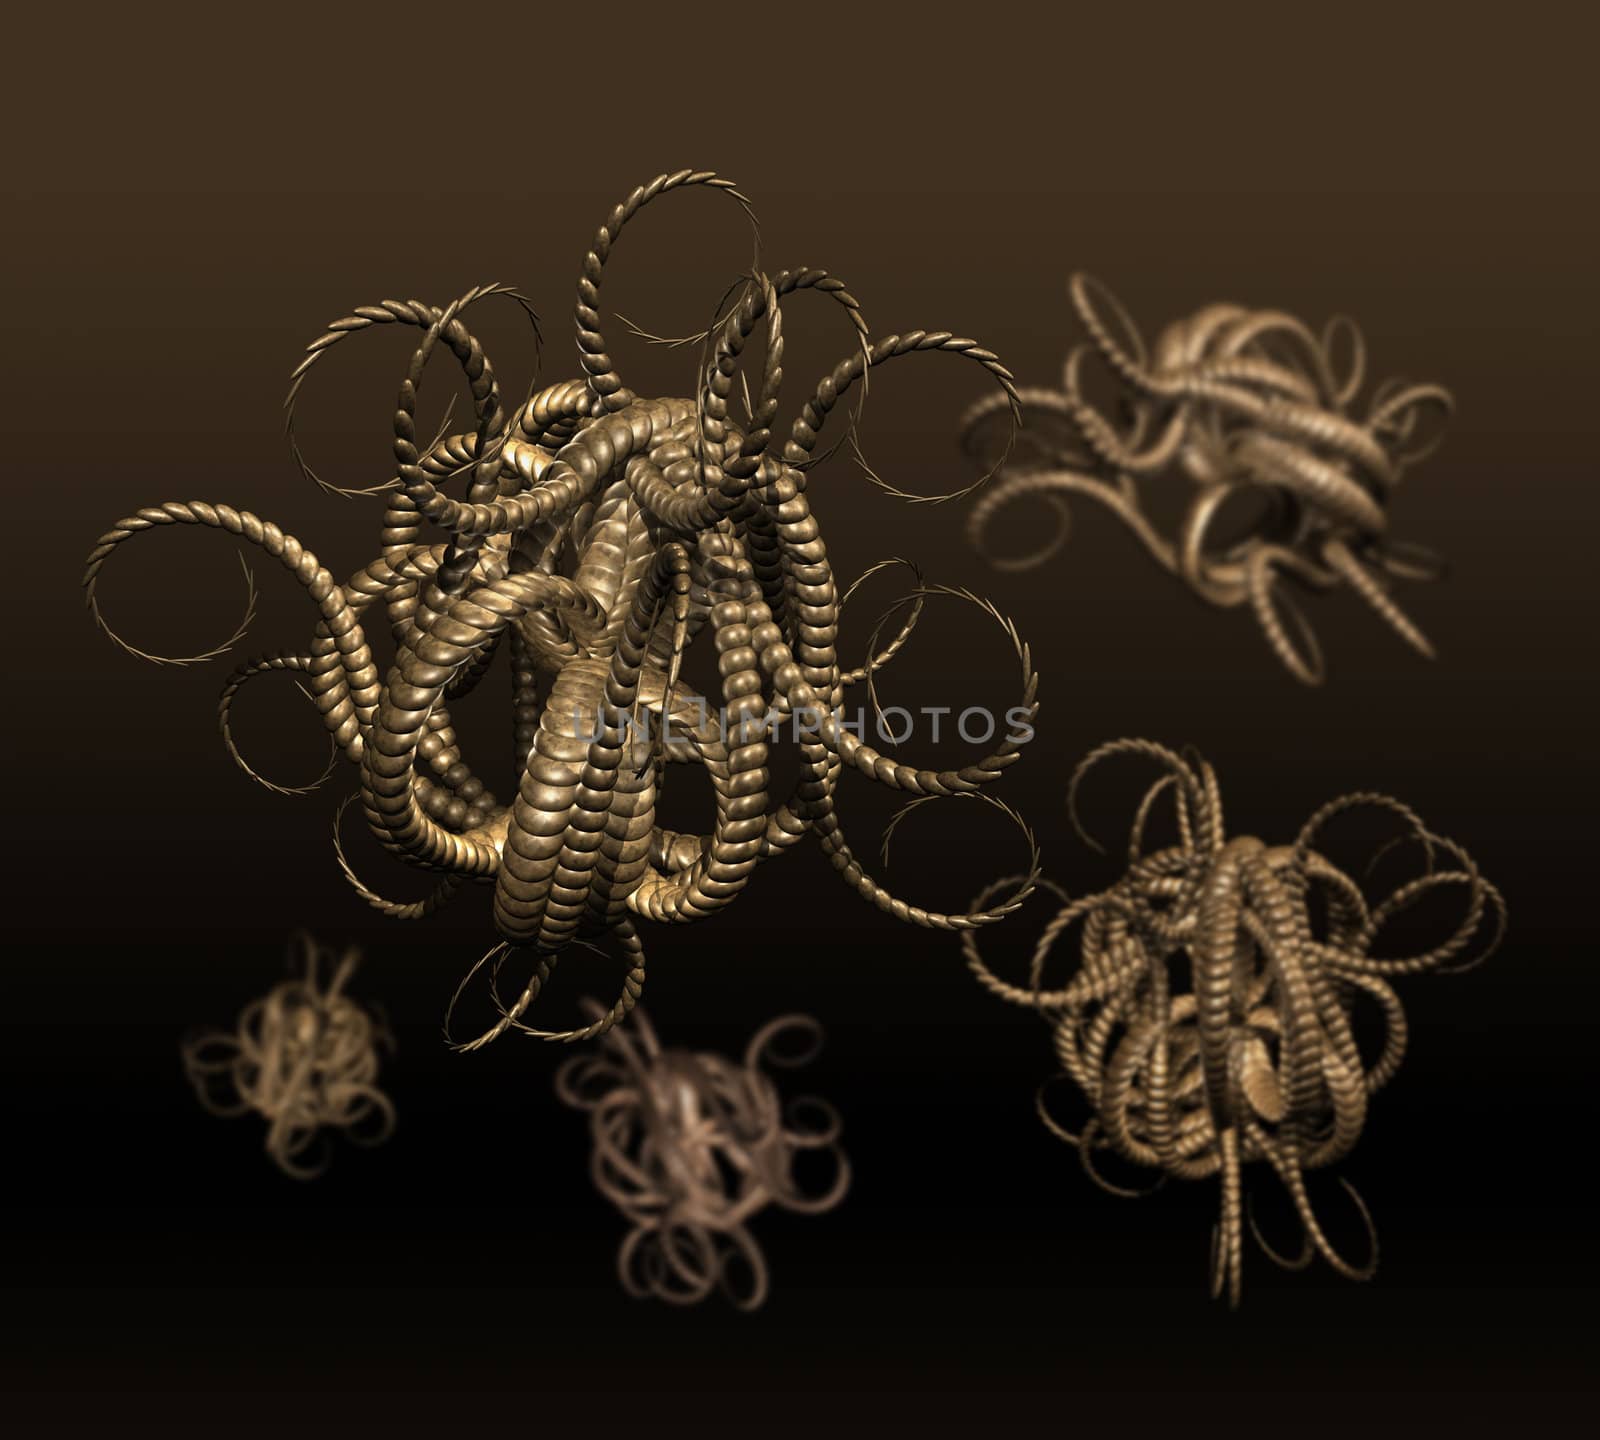 Alien viruses spreading by anterovium